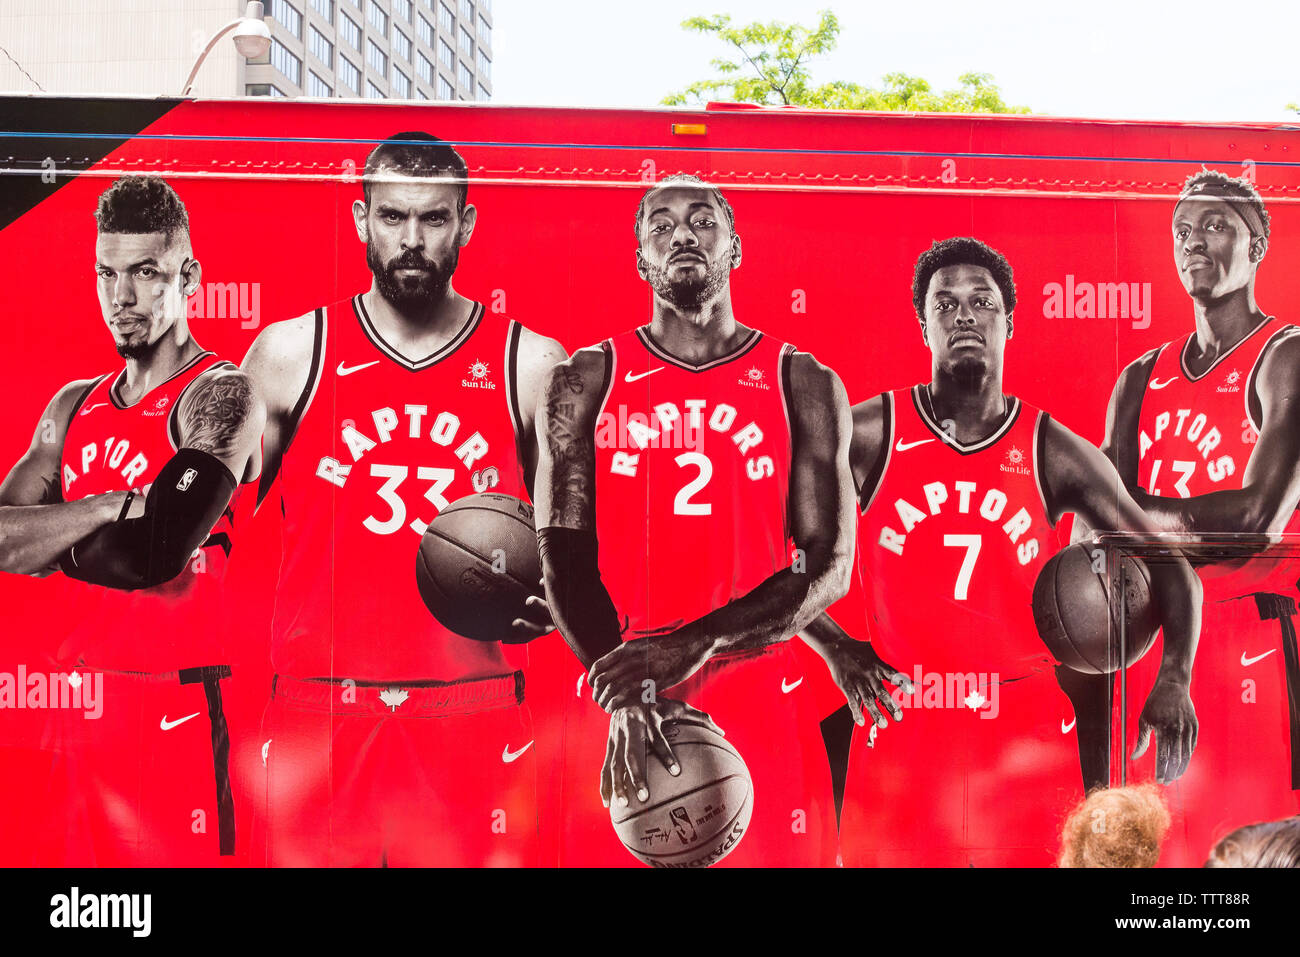 Basketball Forever - Dope Toronto Raptors jersey concept!